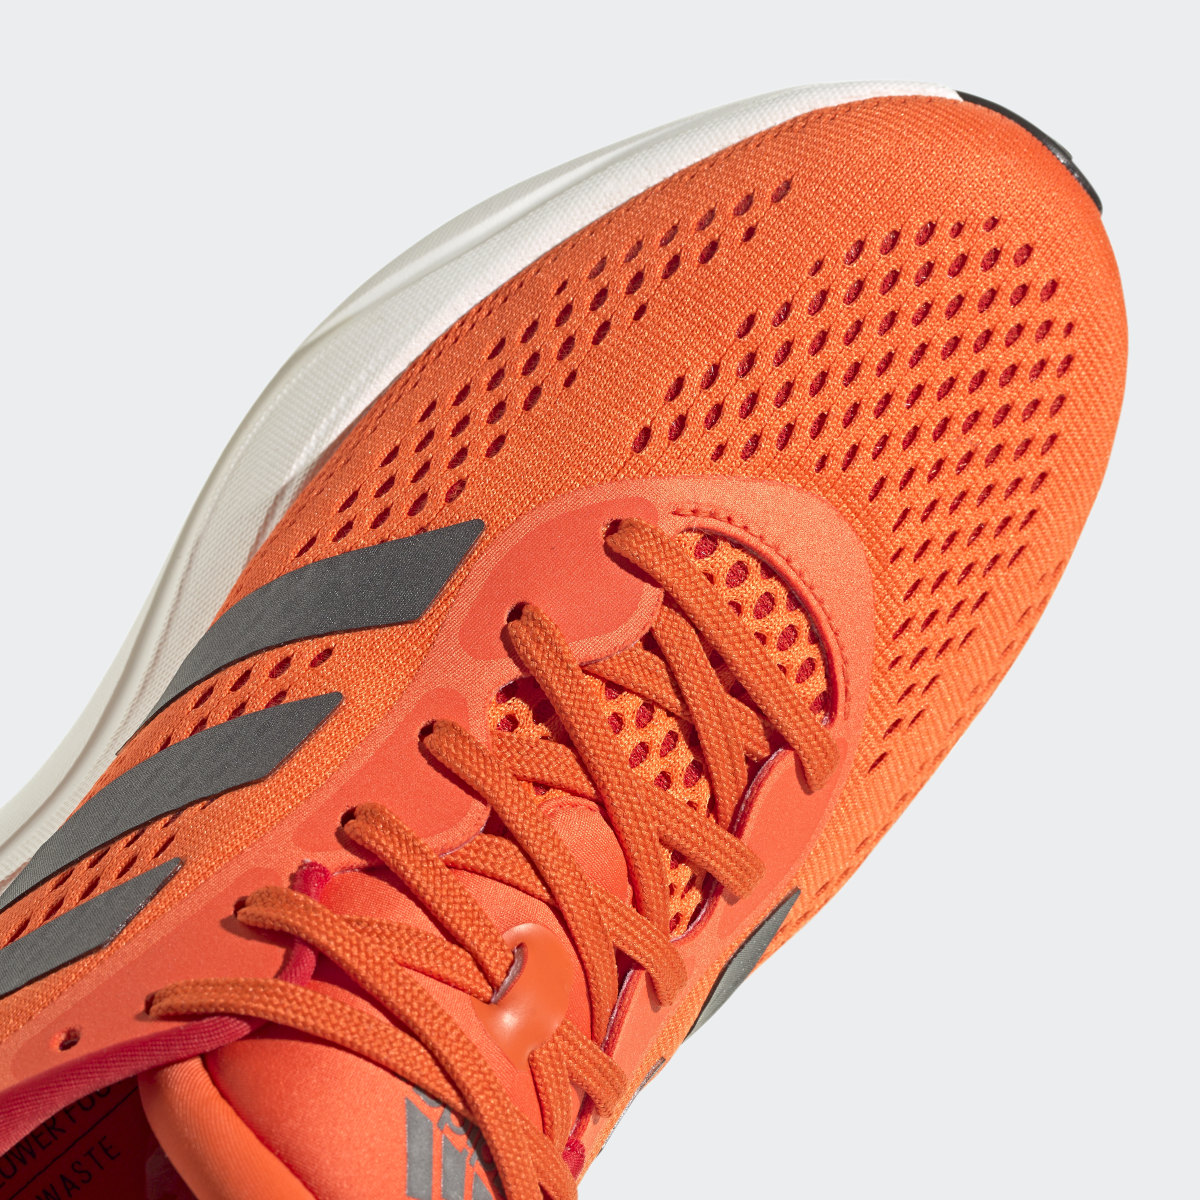 Adidas Supernova 2.0 Running Shoes. 10